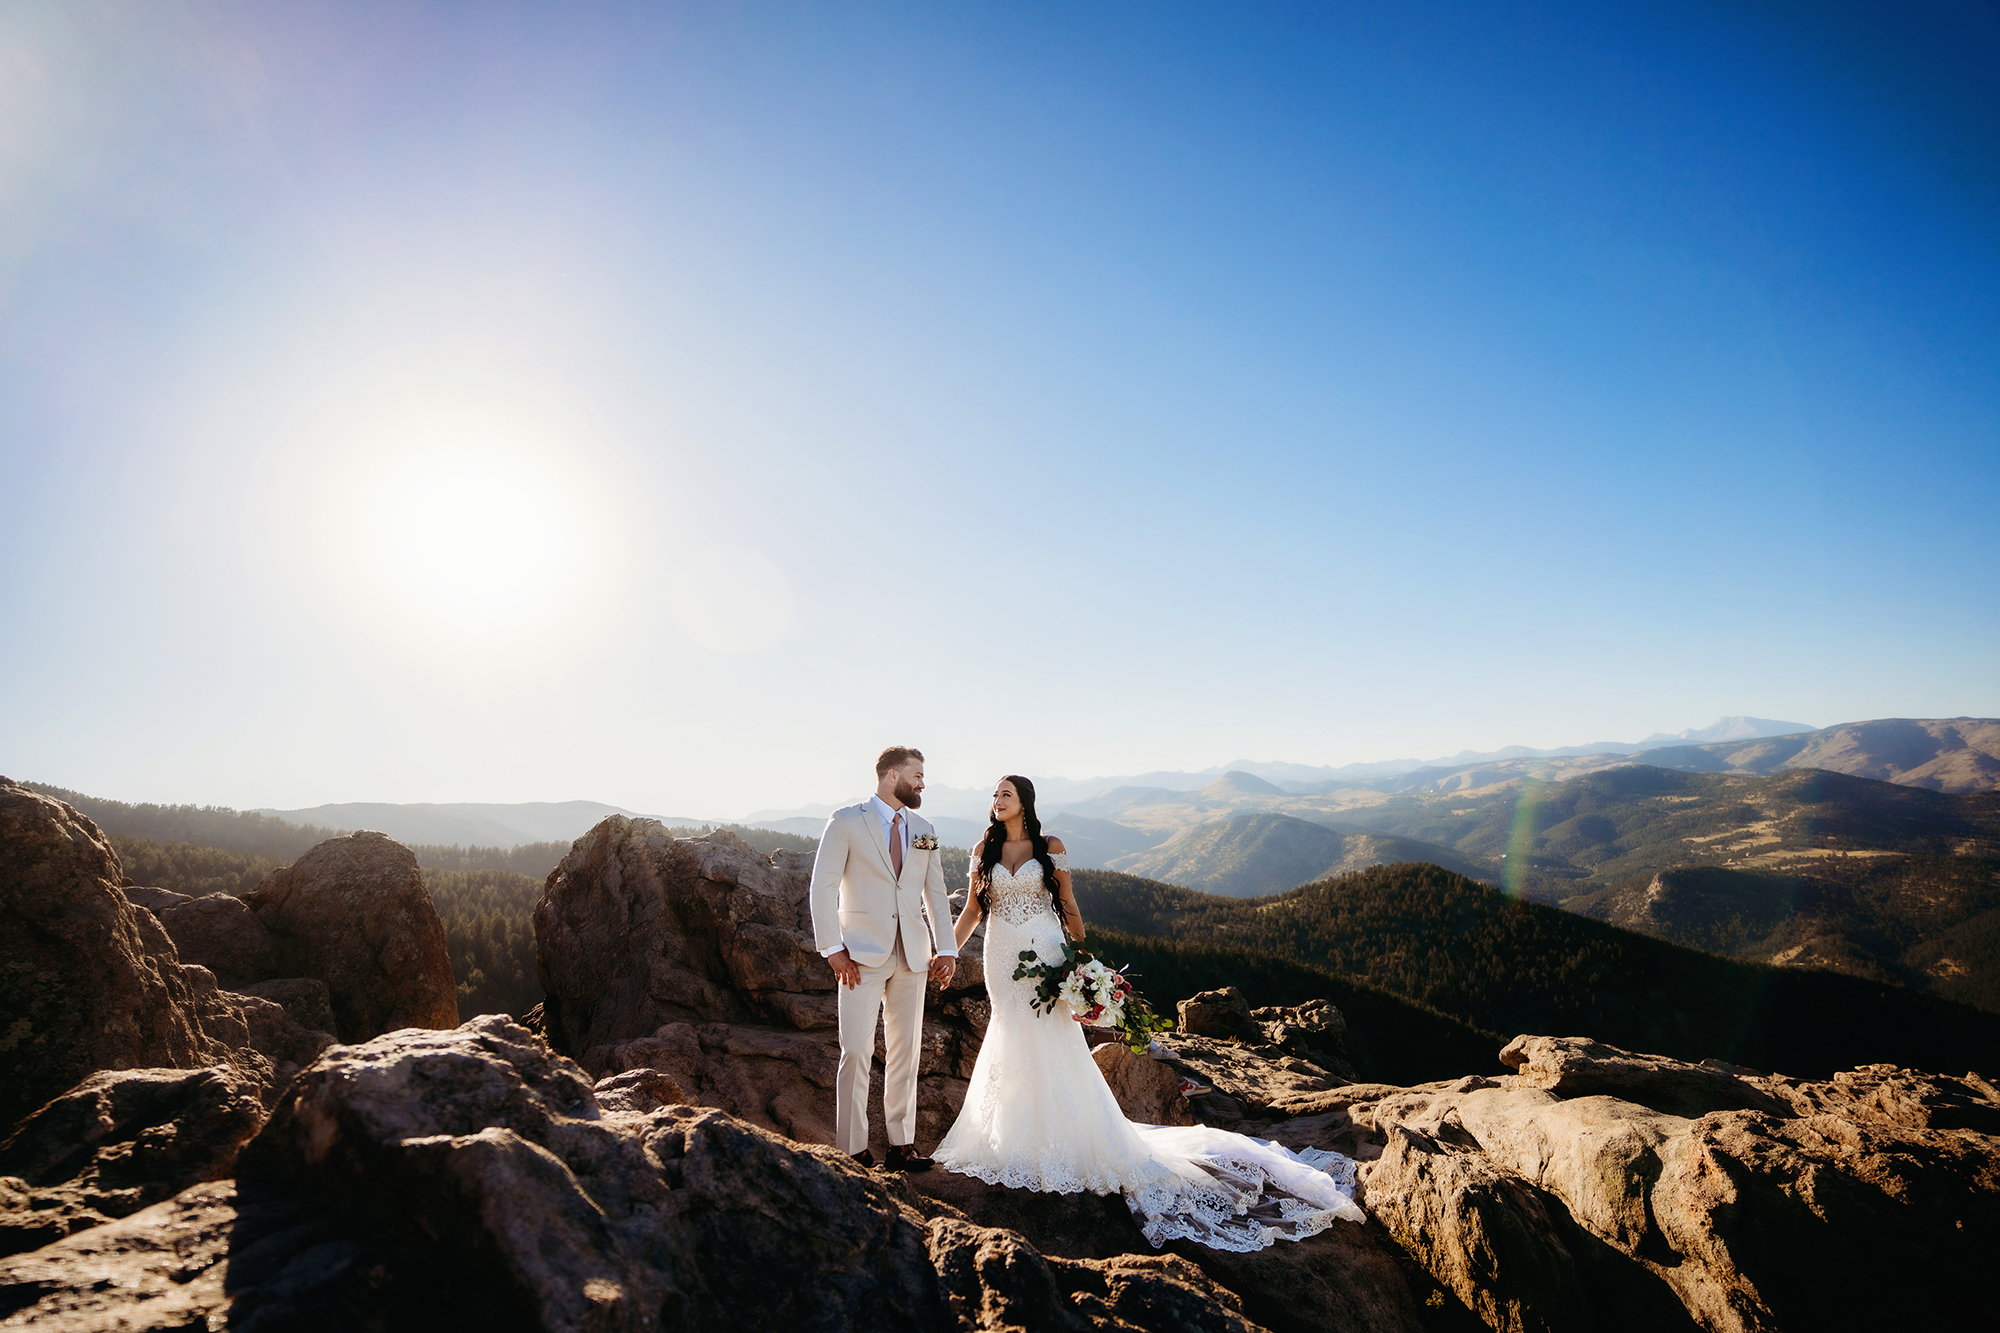 Colorado elopement photographer captures bride and groom standing hand in hand on boulder